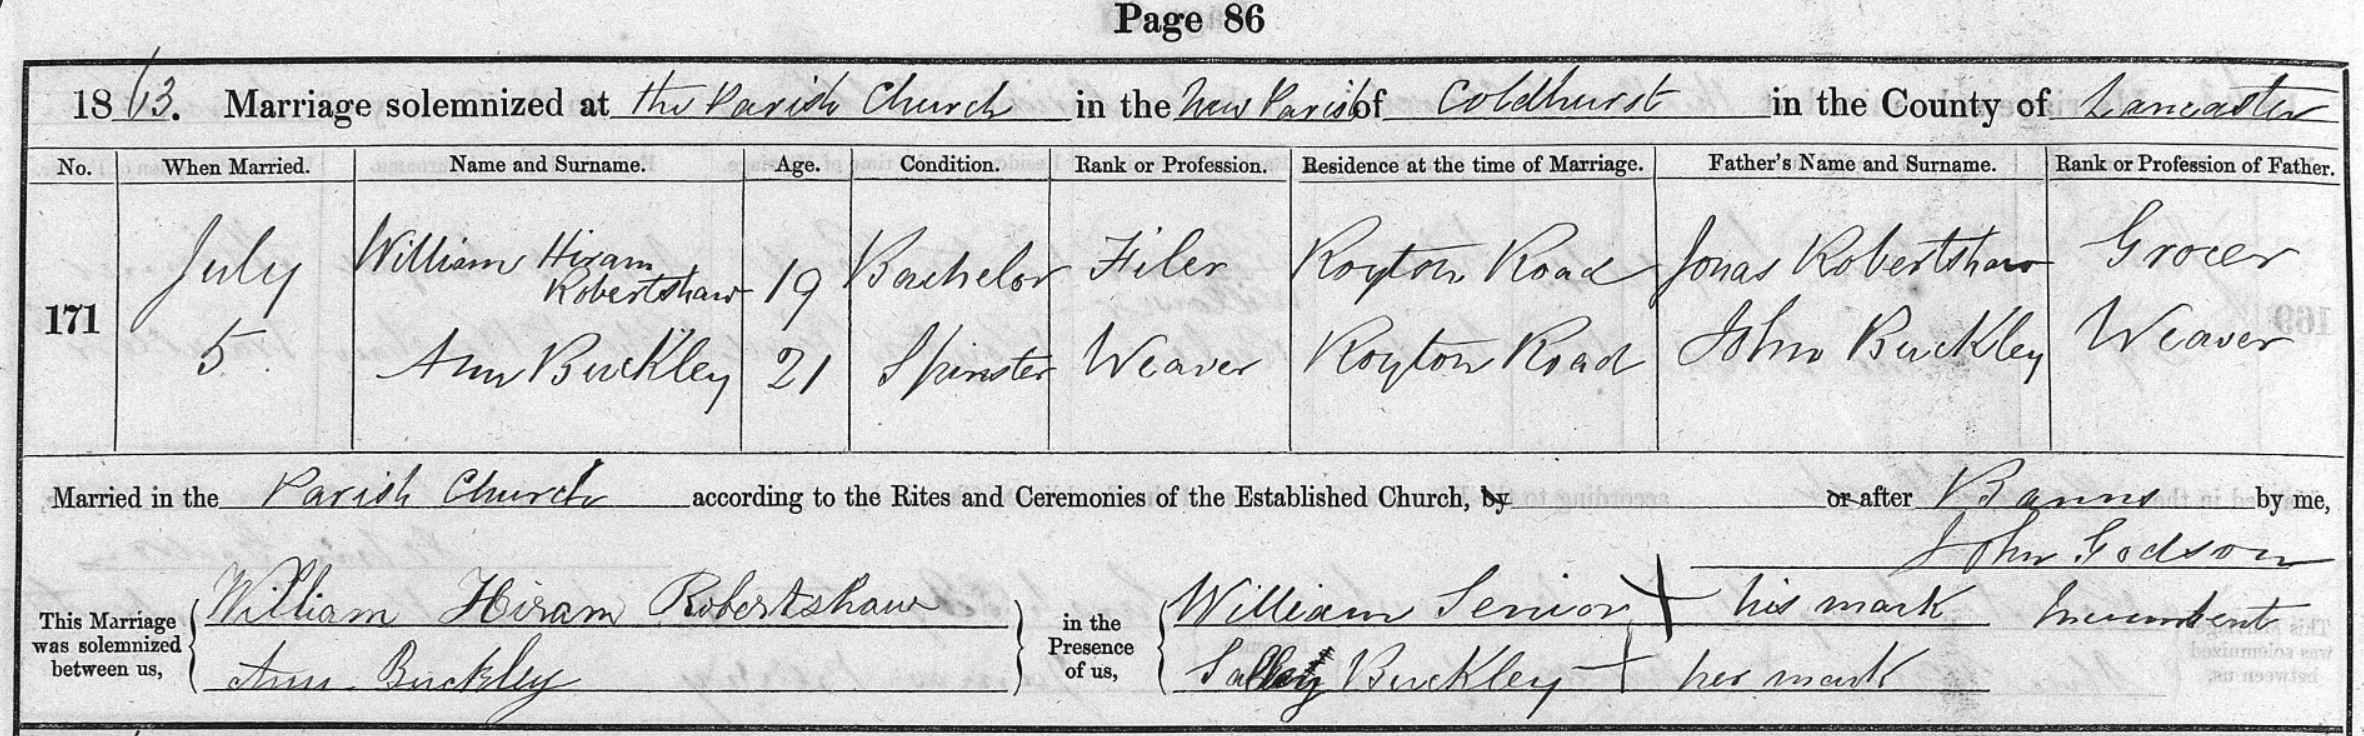 1863 marriage of Ann Buckley to William Hiram Robertshaw